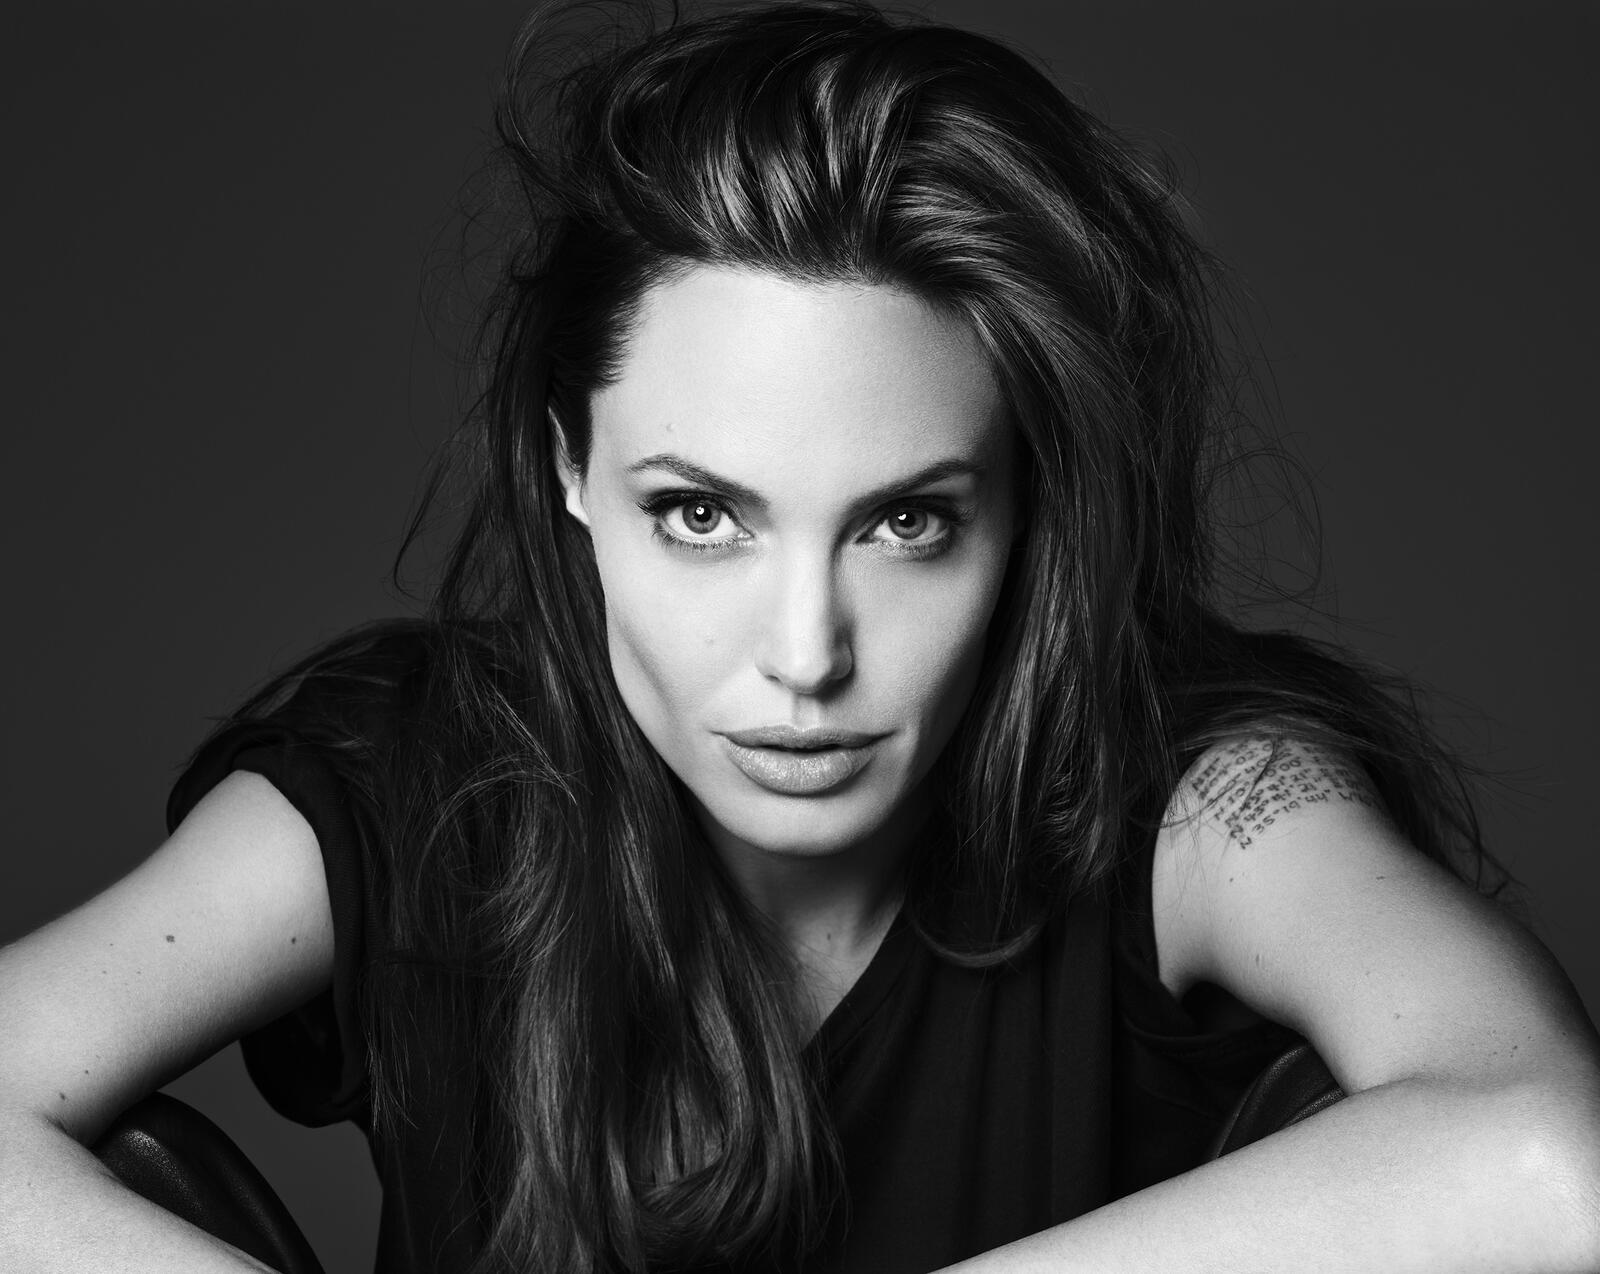 Обои женщина актриса Анджелина Джоли на рабочий стол